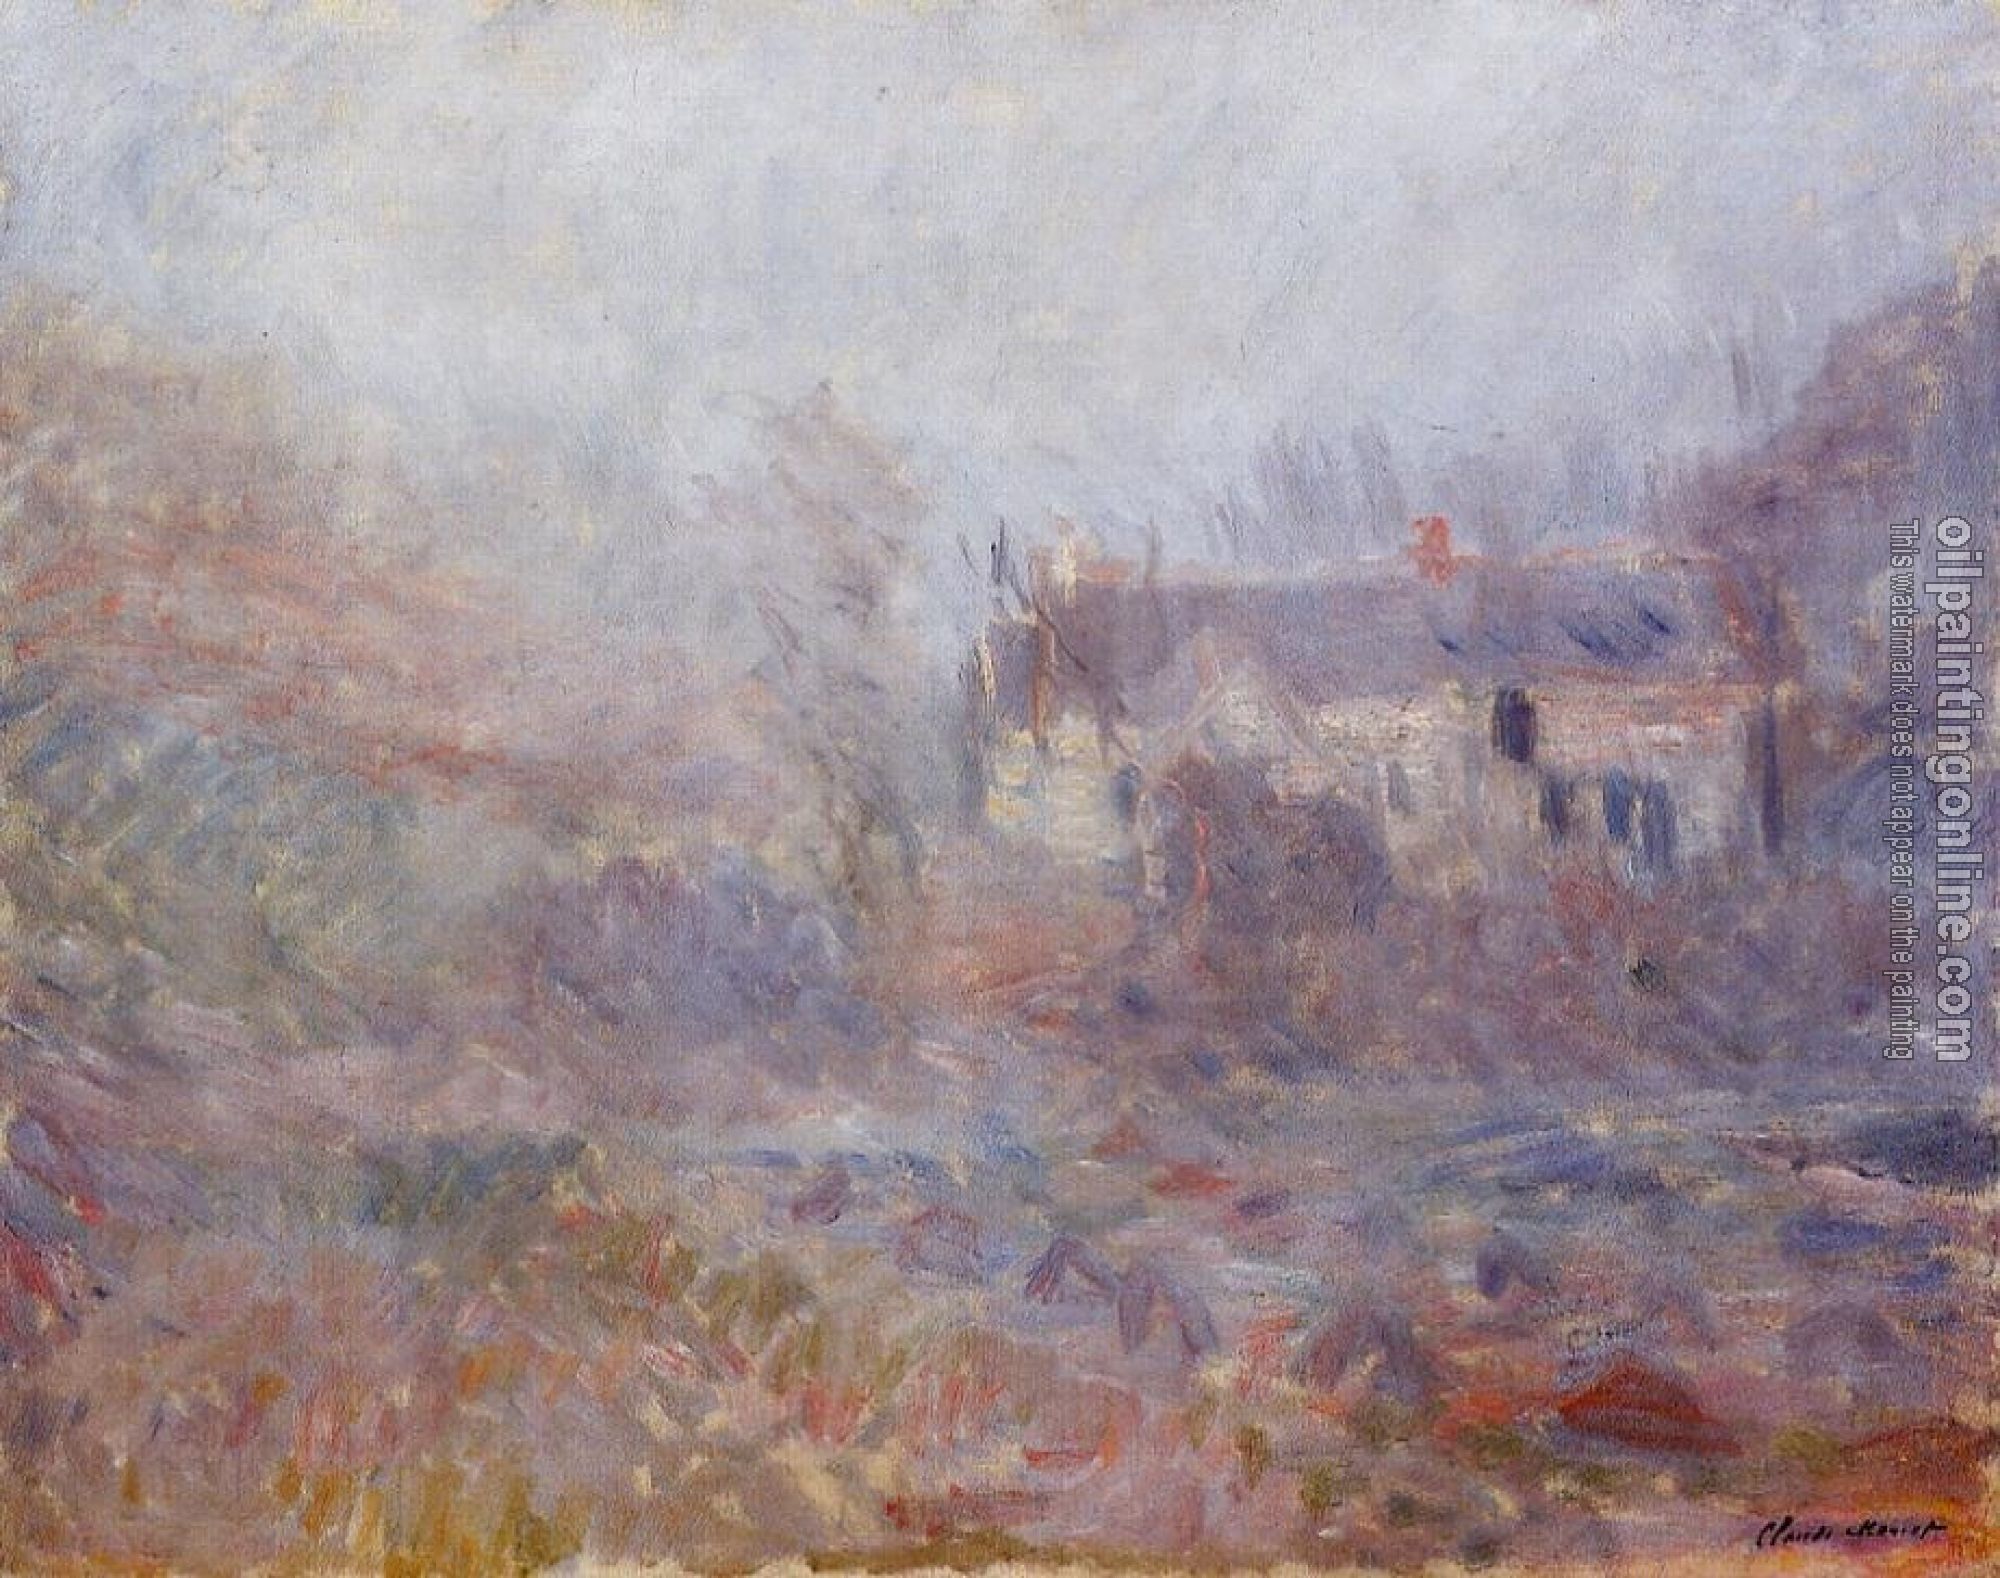 Monet, Claude Oscar - Houses at Falaise in the Fog